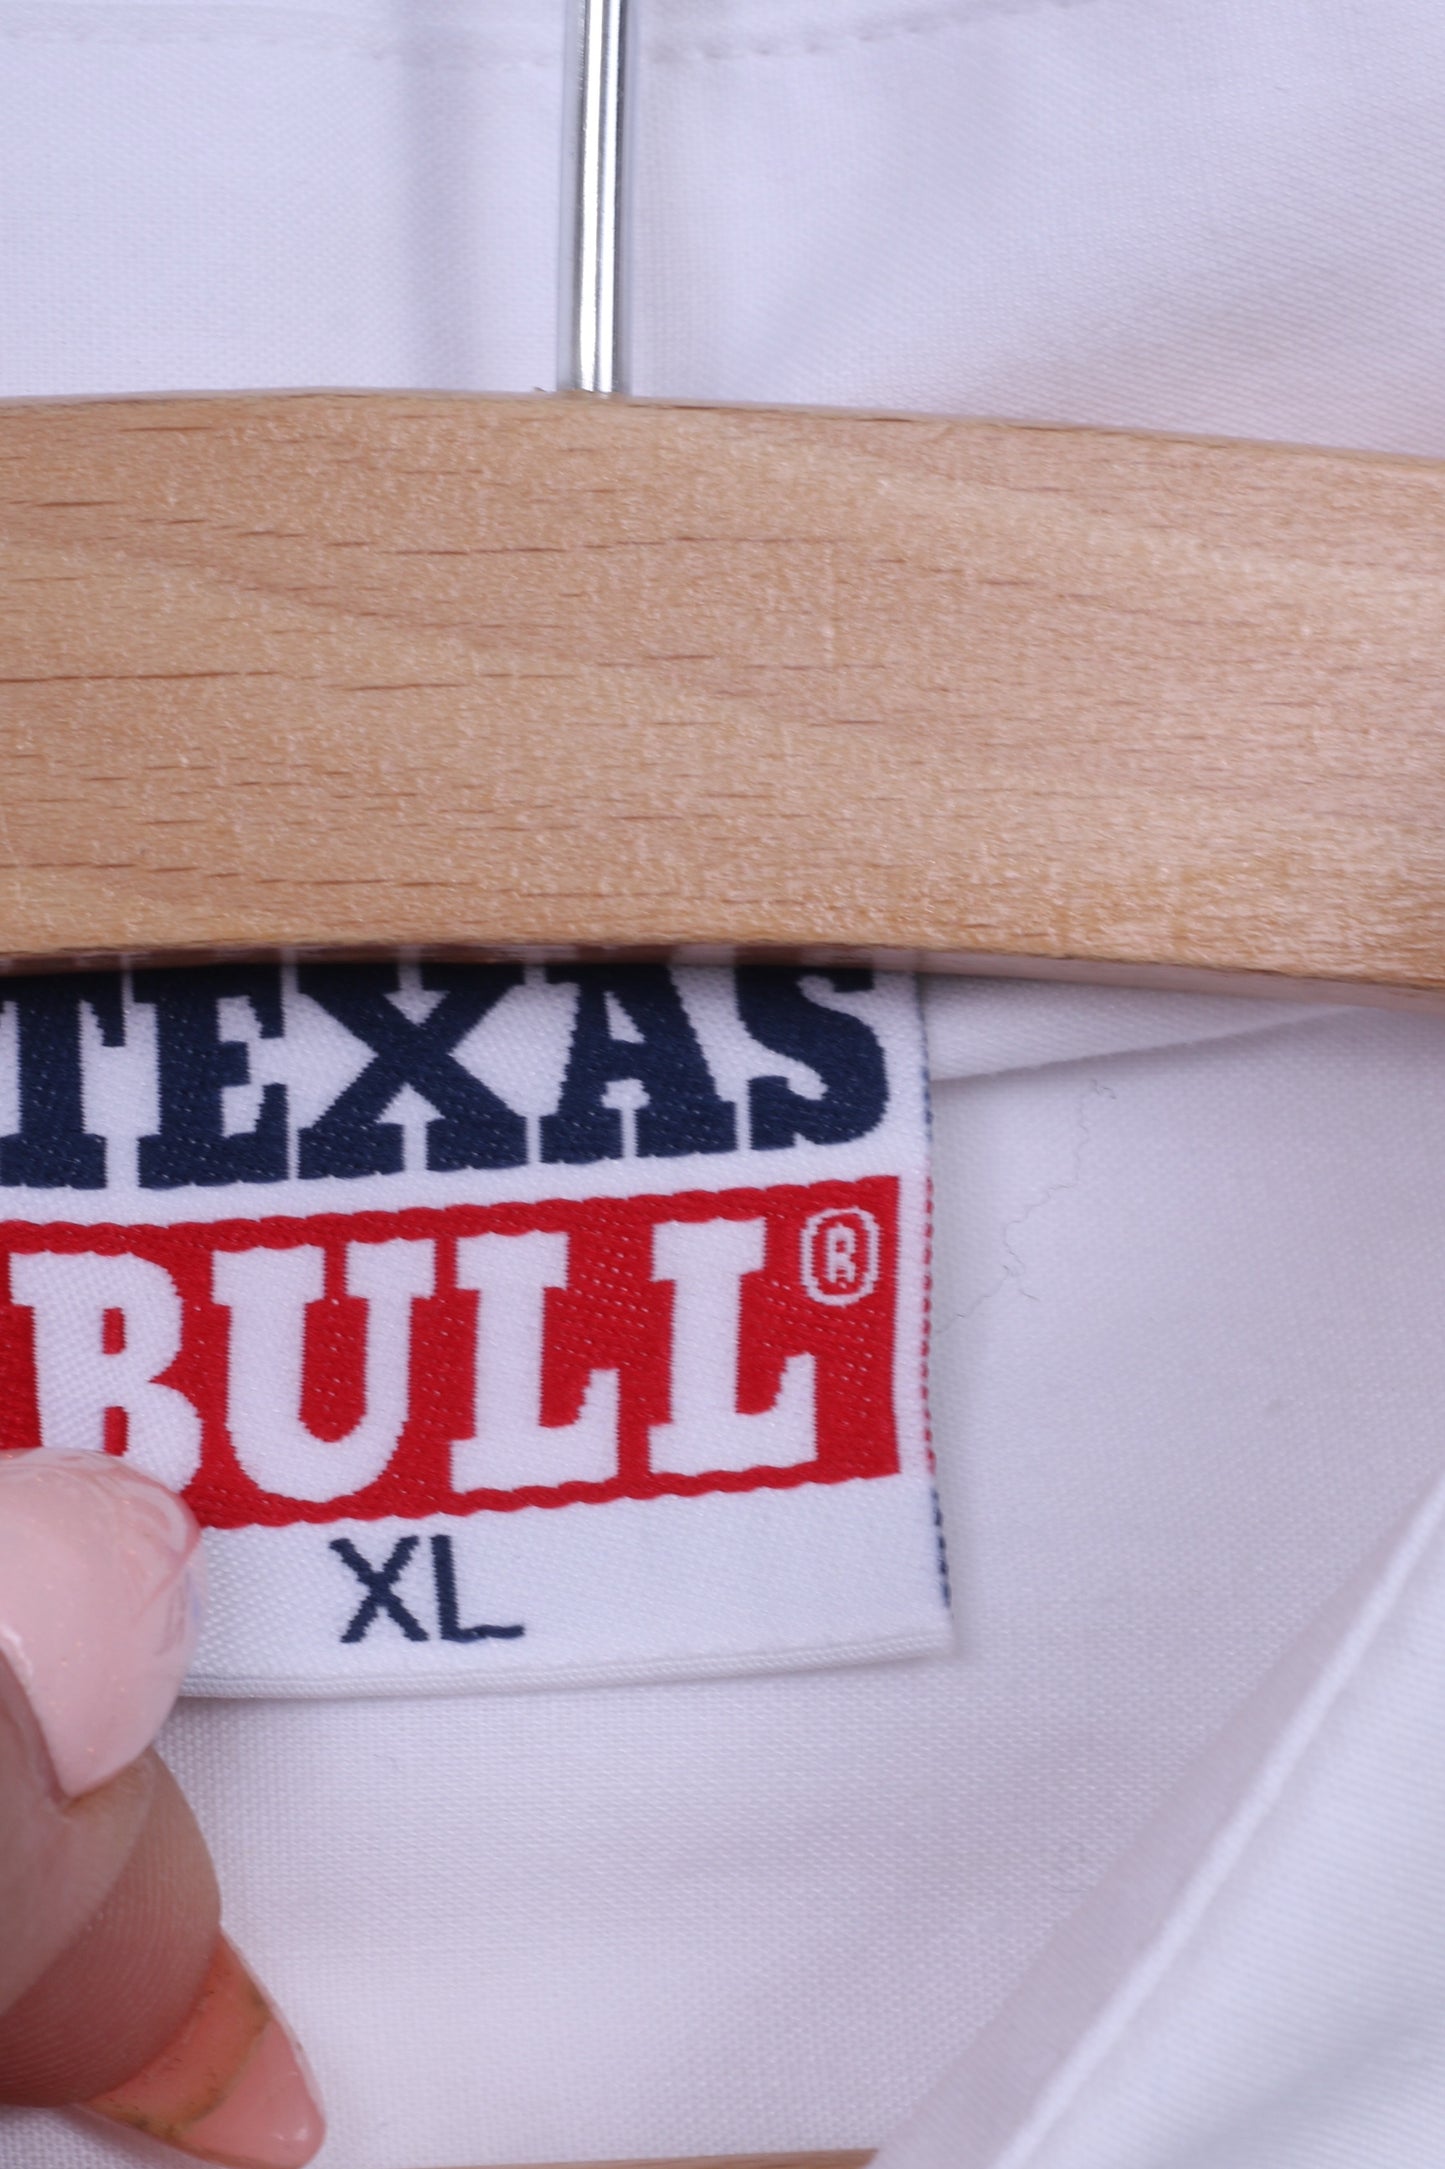 Texas Bull Tipper Klub Ehc Visp Camicia casual XL da uomo Bianco Hockey su ghiaccio in cotone